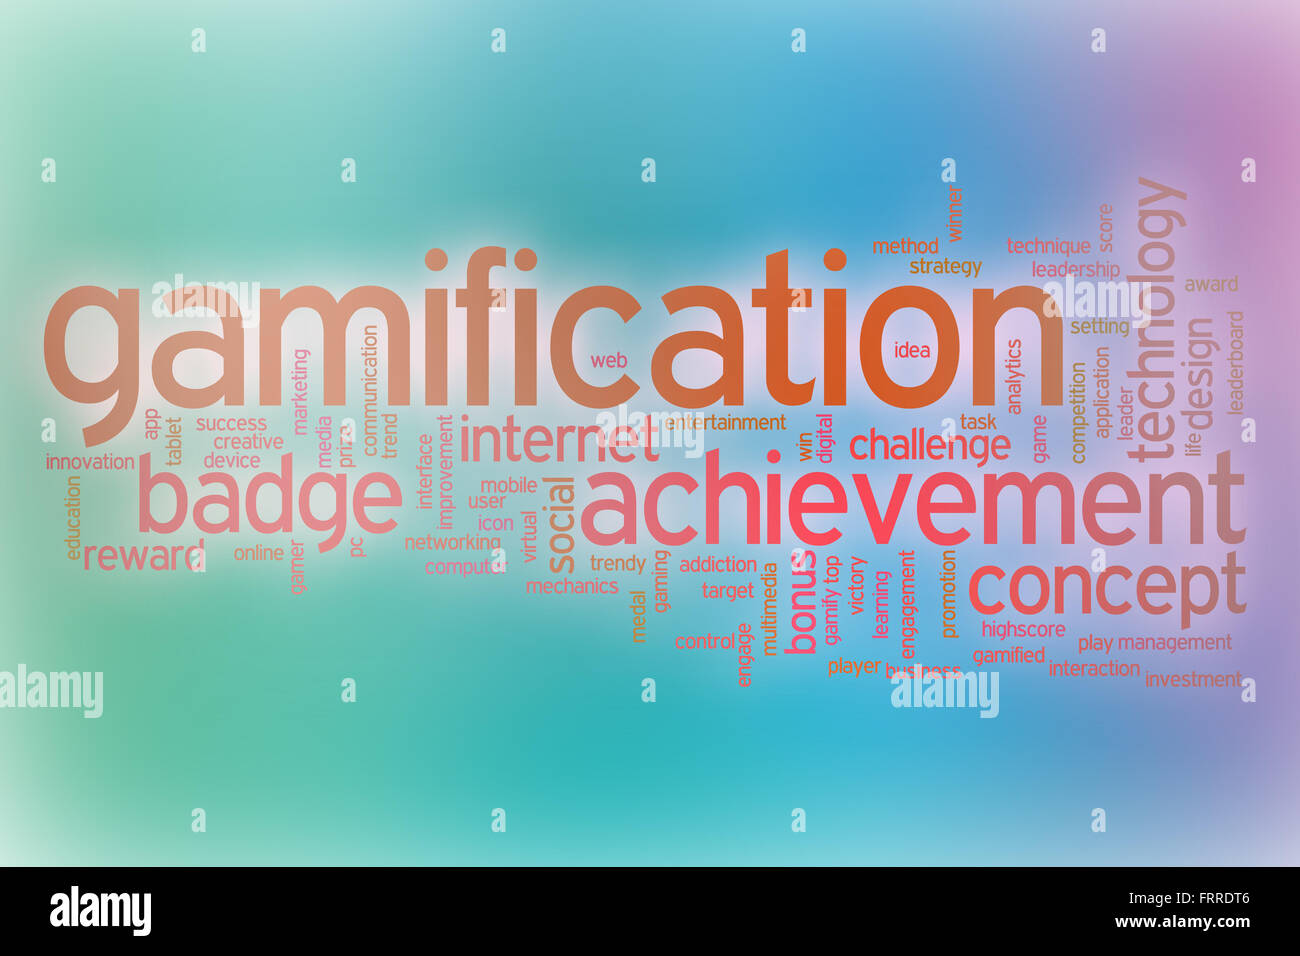 Gamification mot concept cloud avec abstract background Banque D'Images